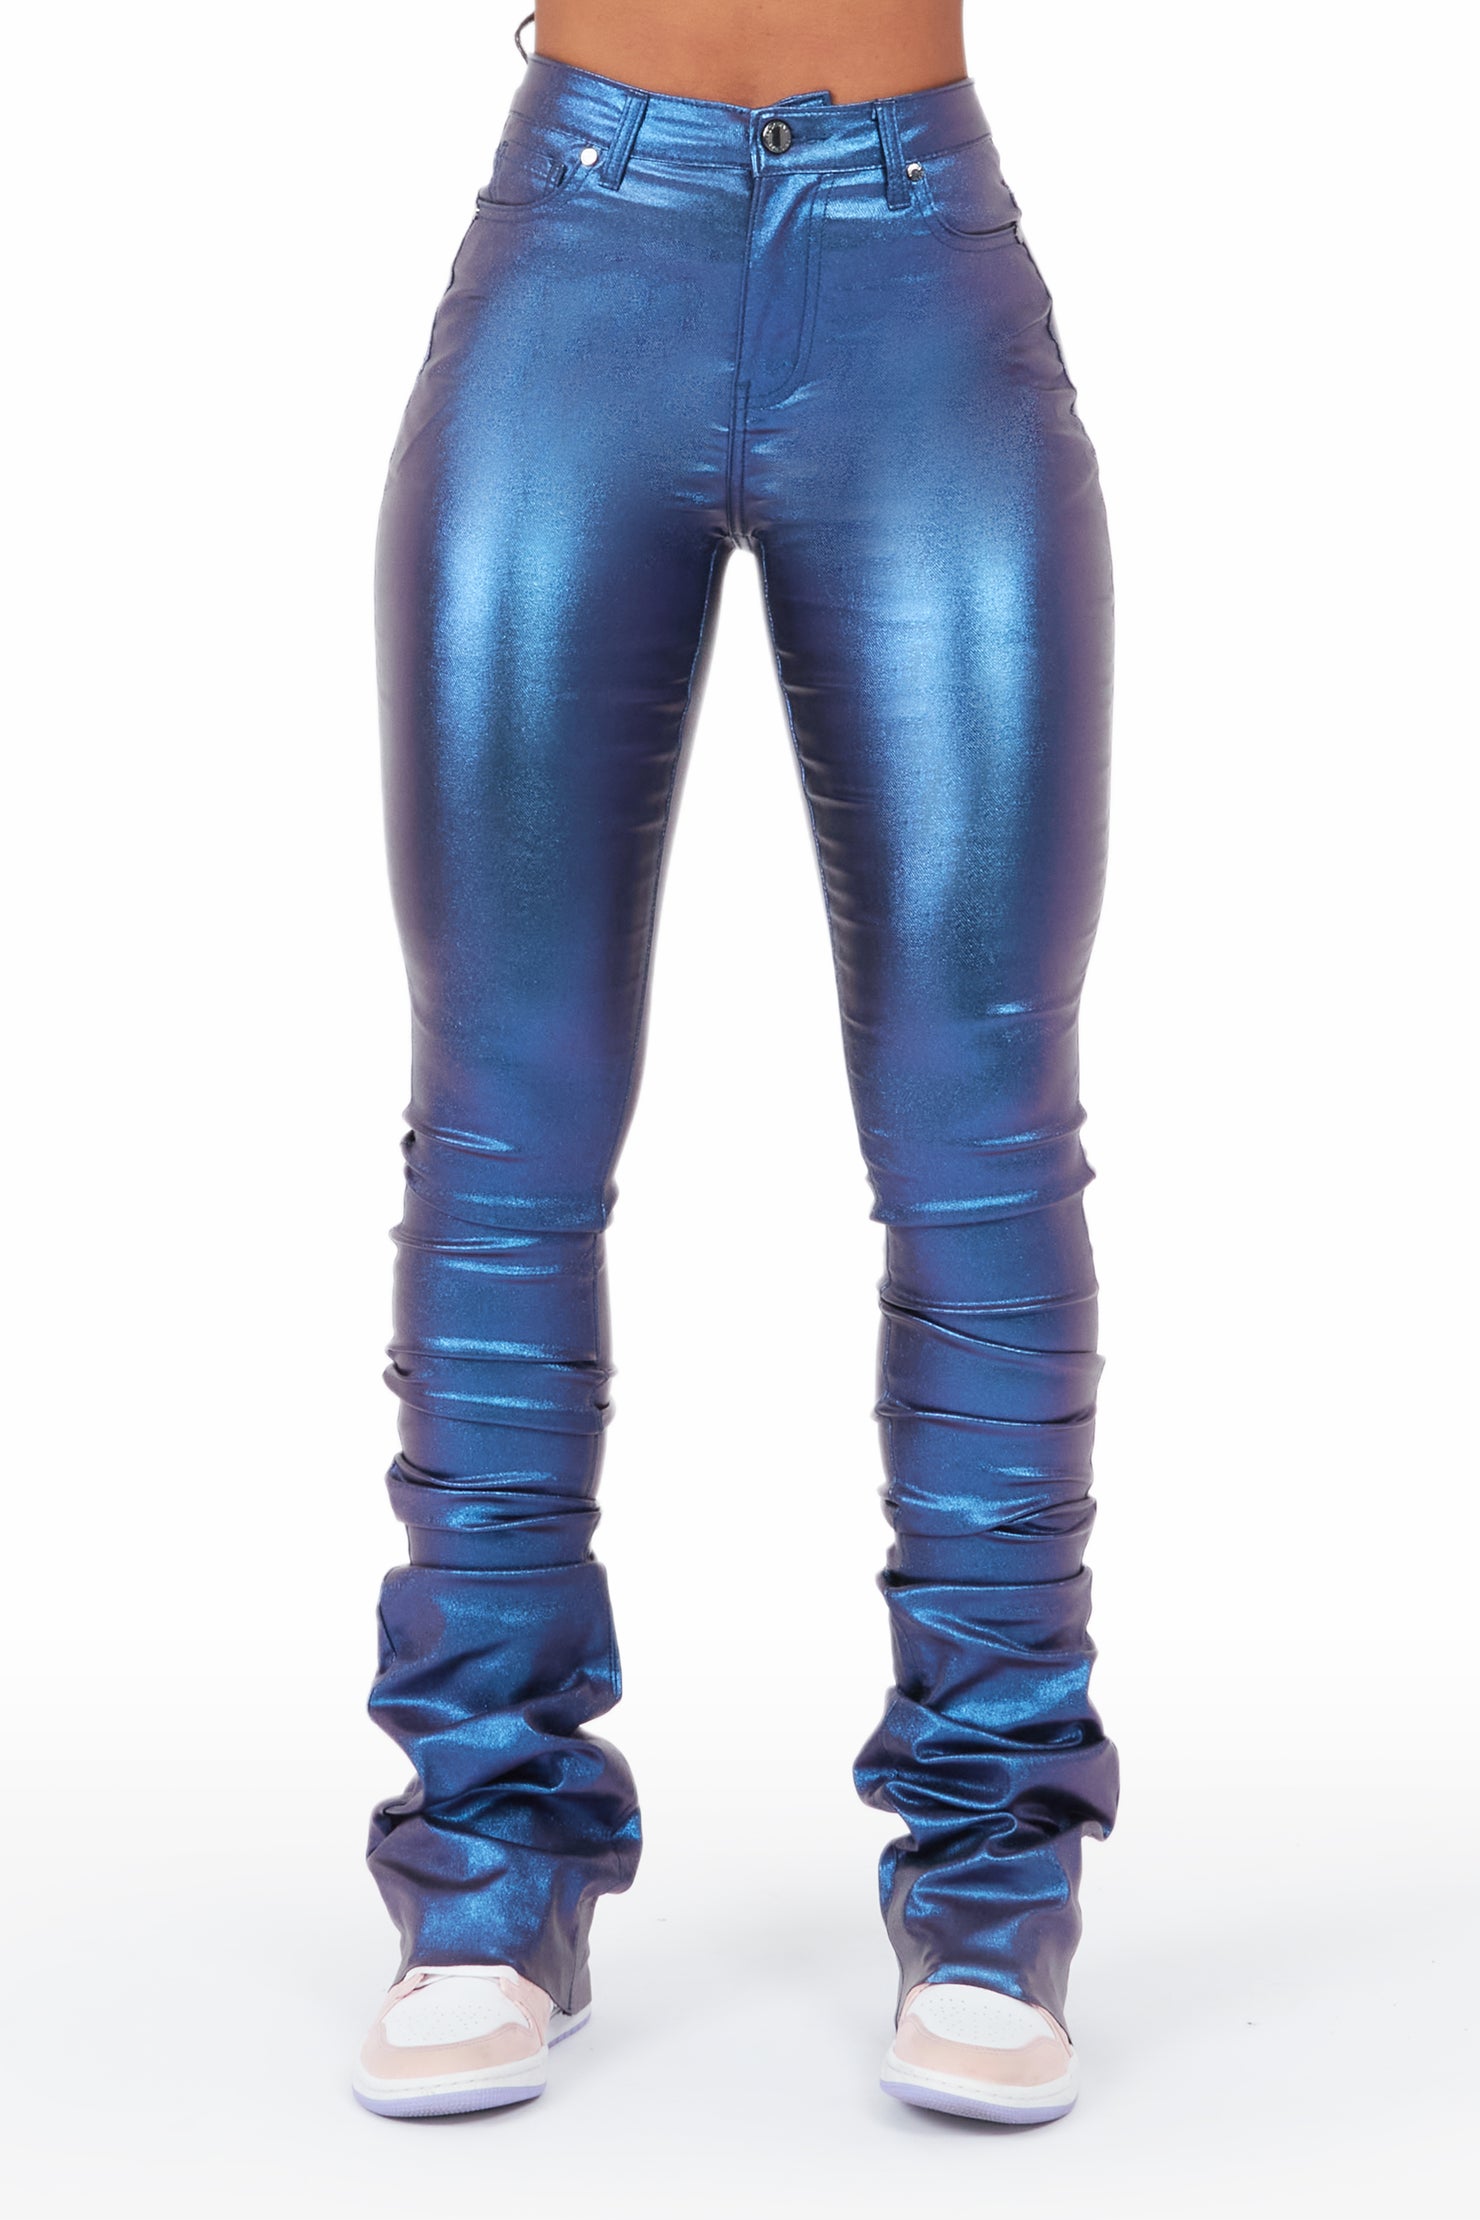 The Drama Metallic Blue PU Super Stacked Pant